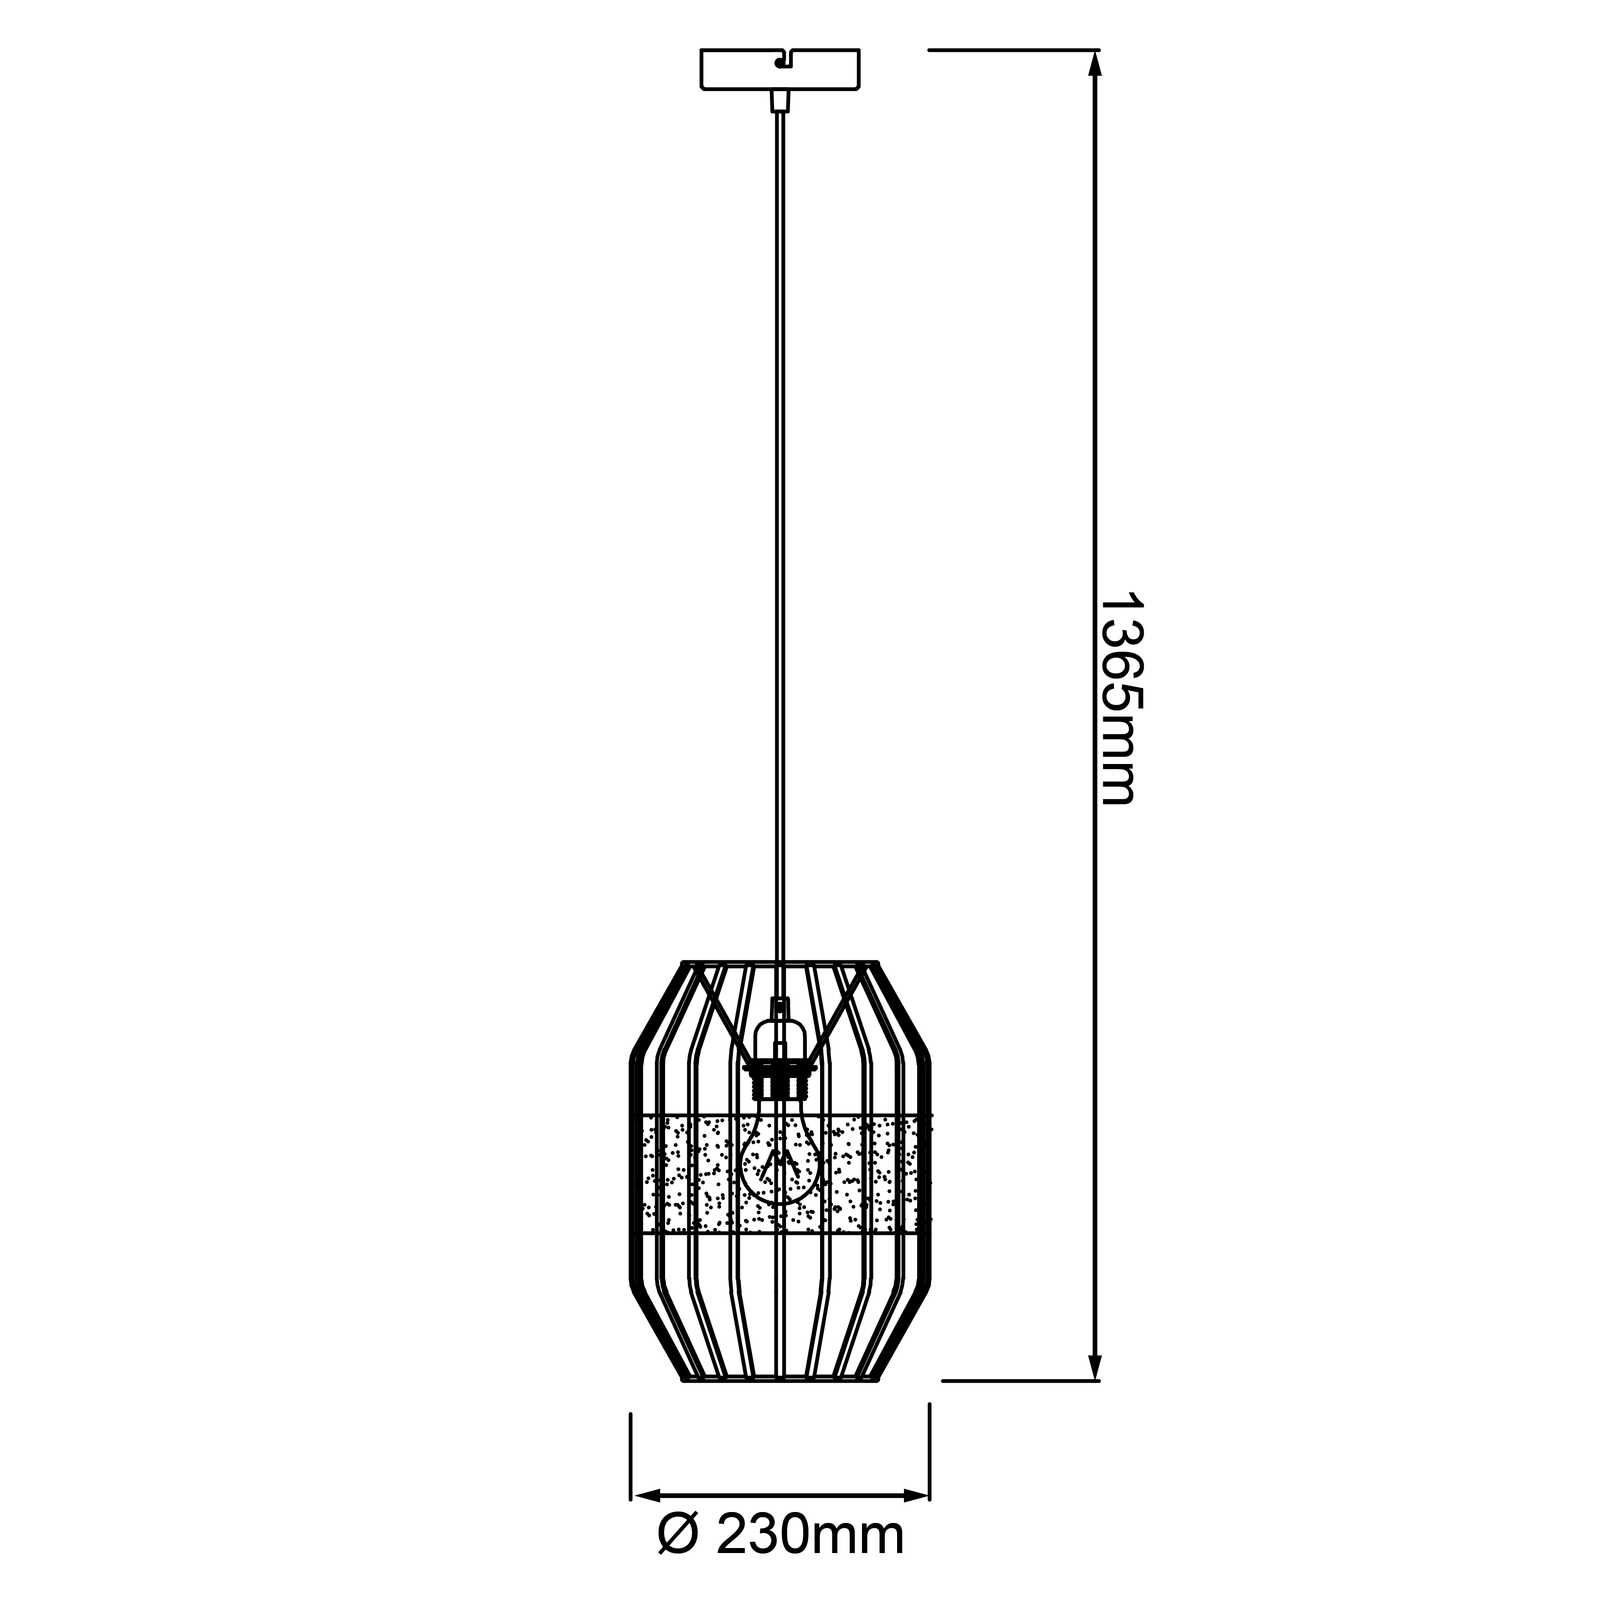             Textiel hanglamp - Nino 1 - Bruin
        